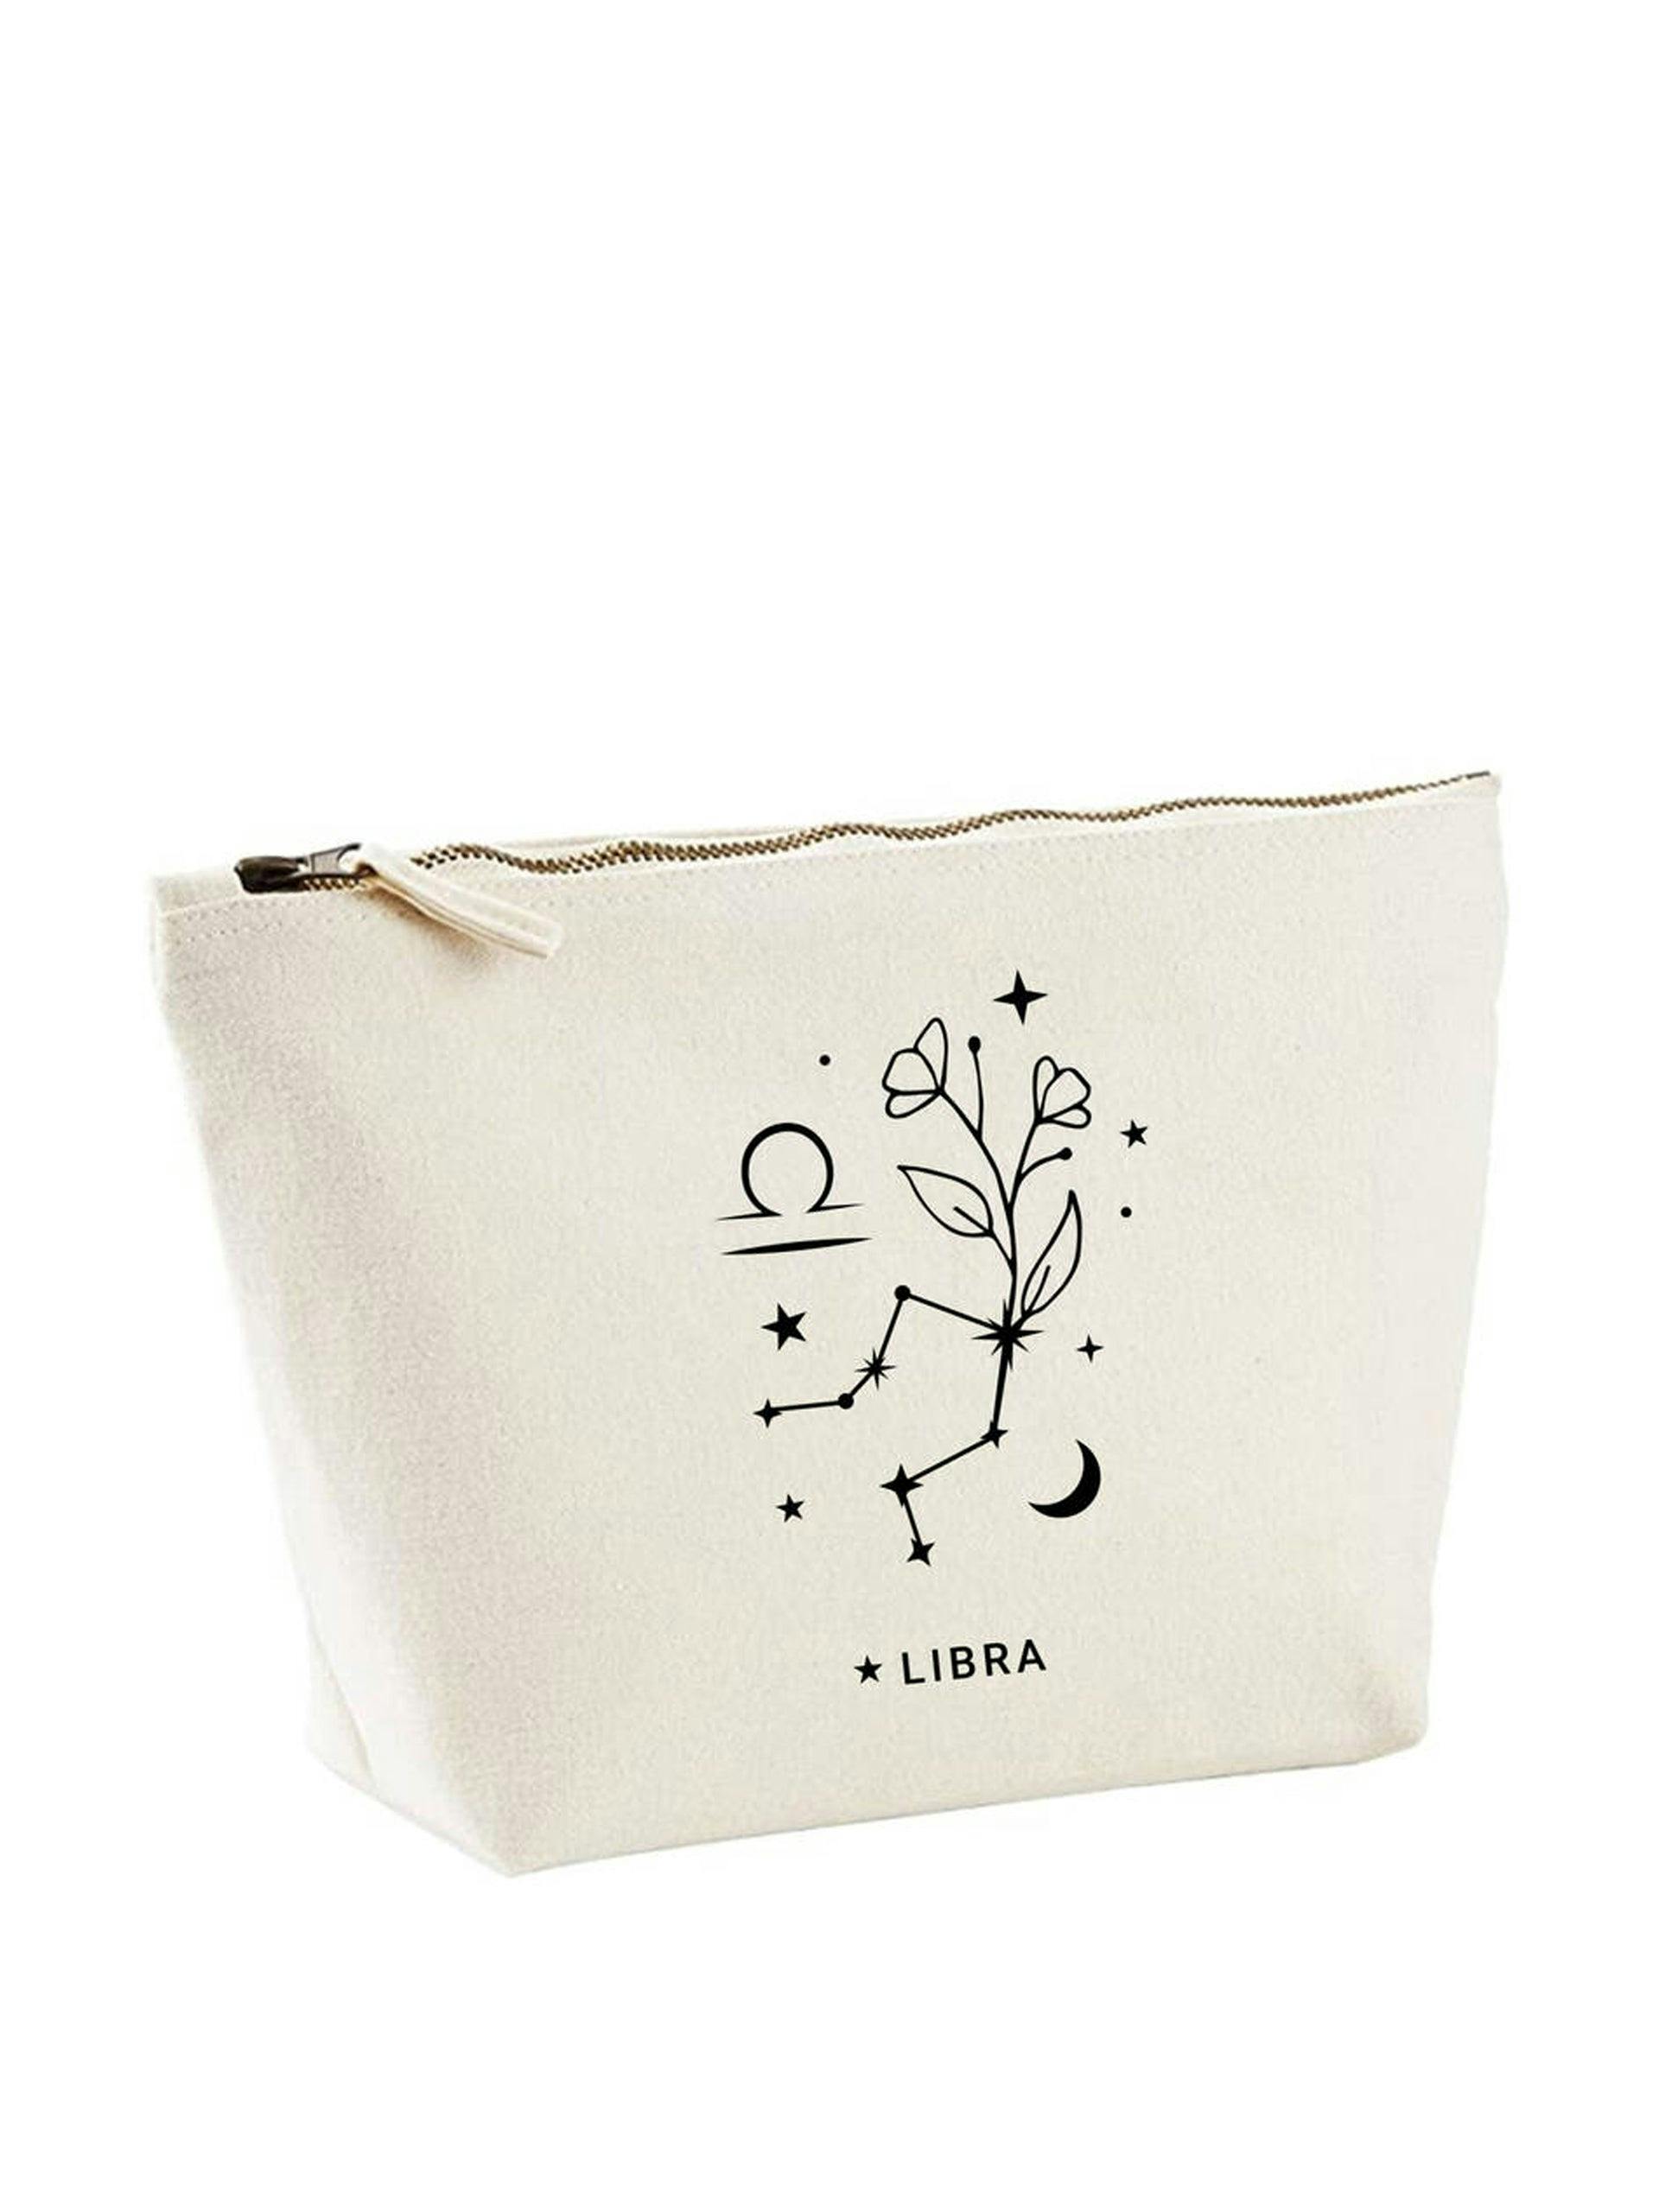 Libra star sign zodiac cosmetics bag